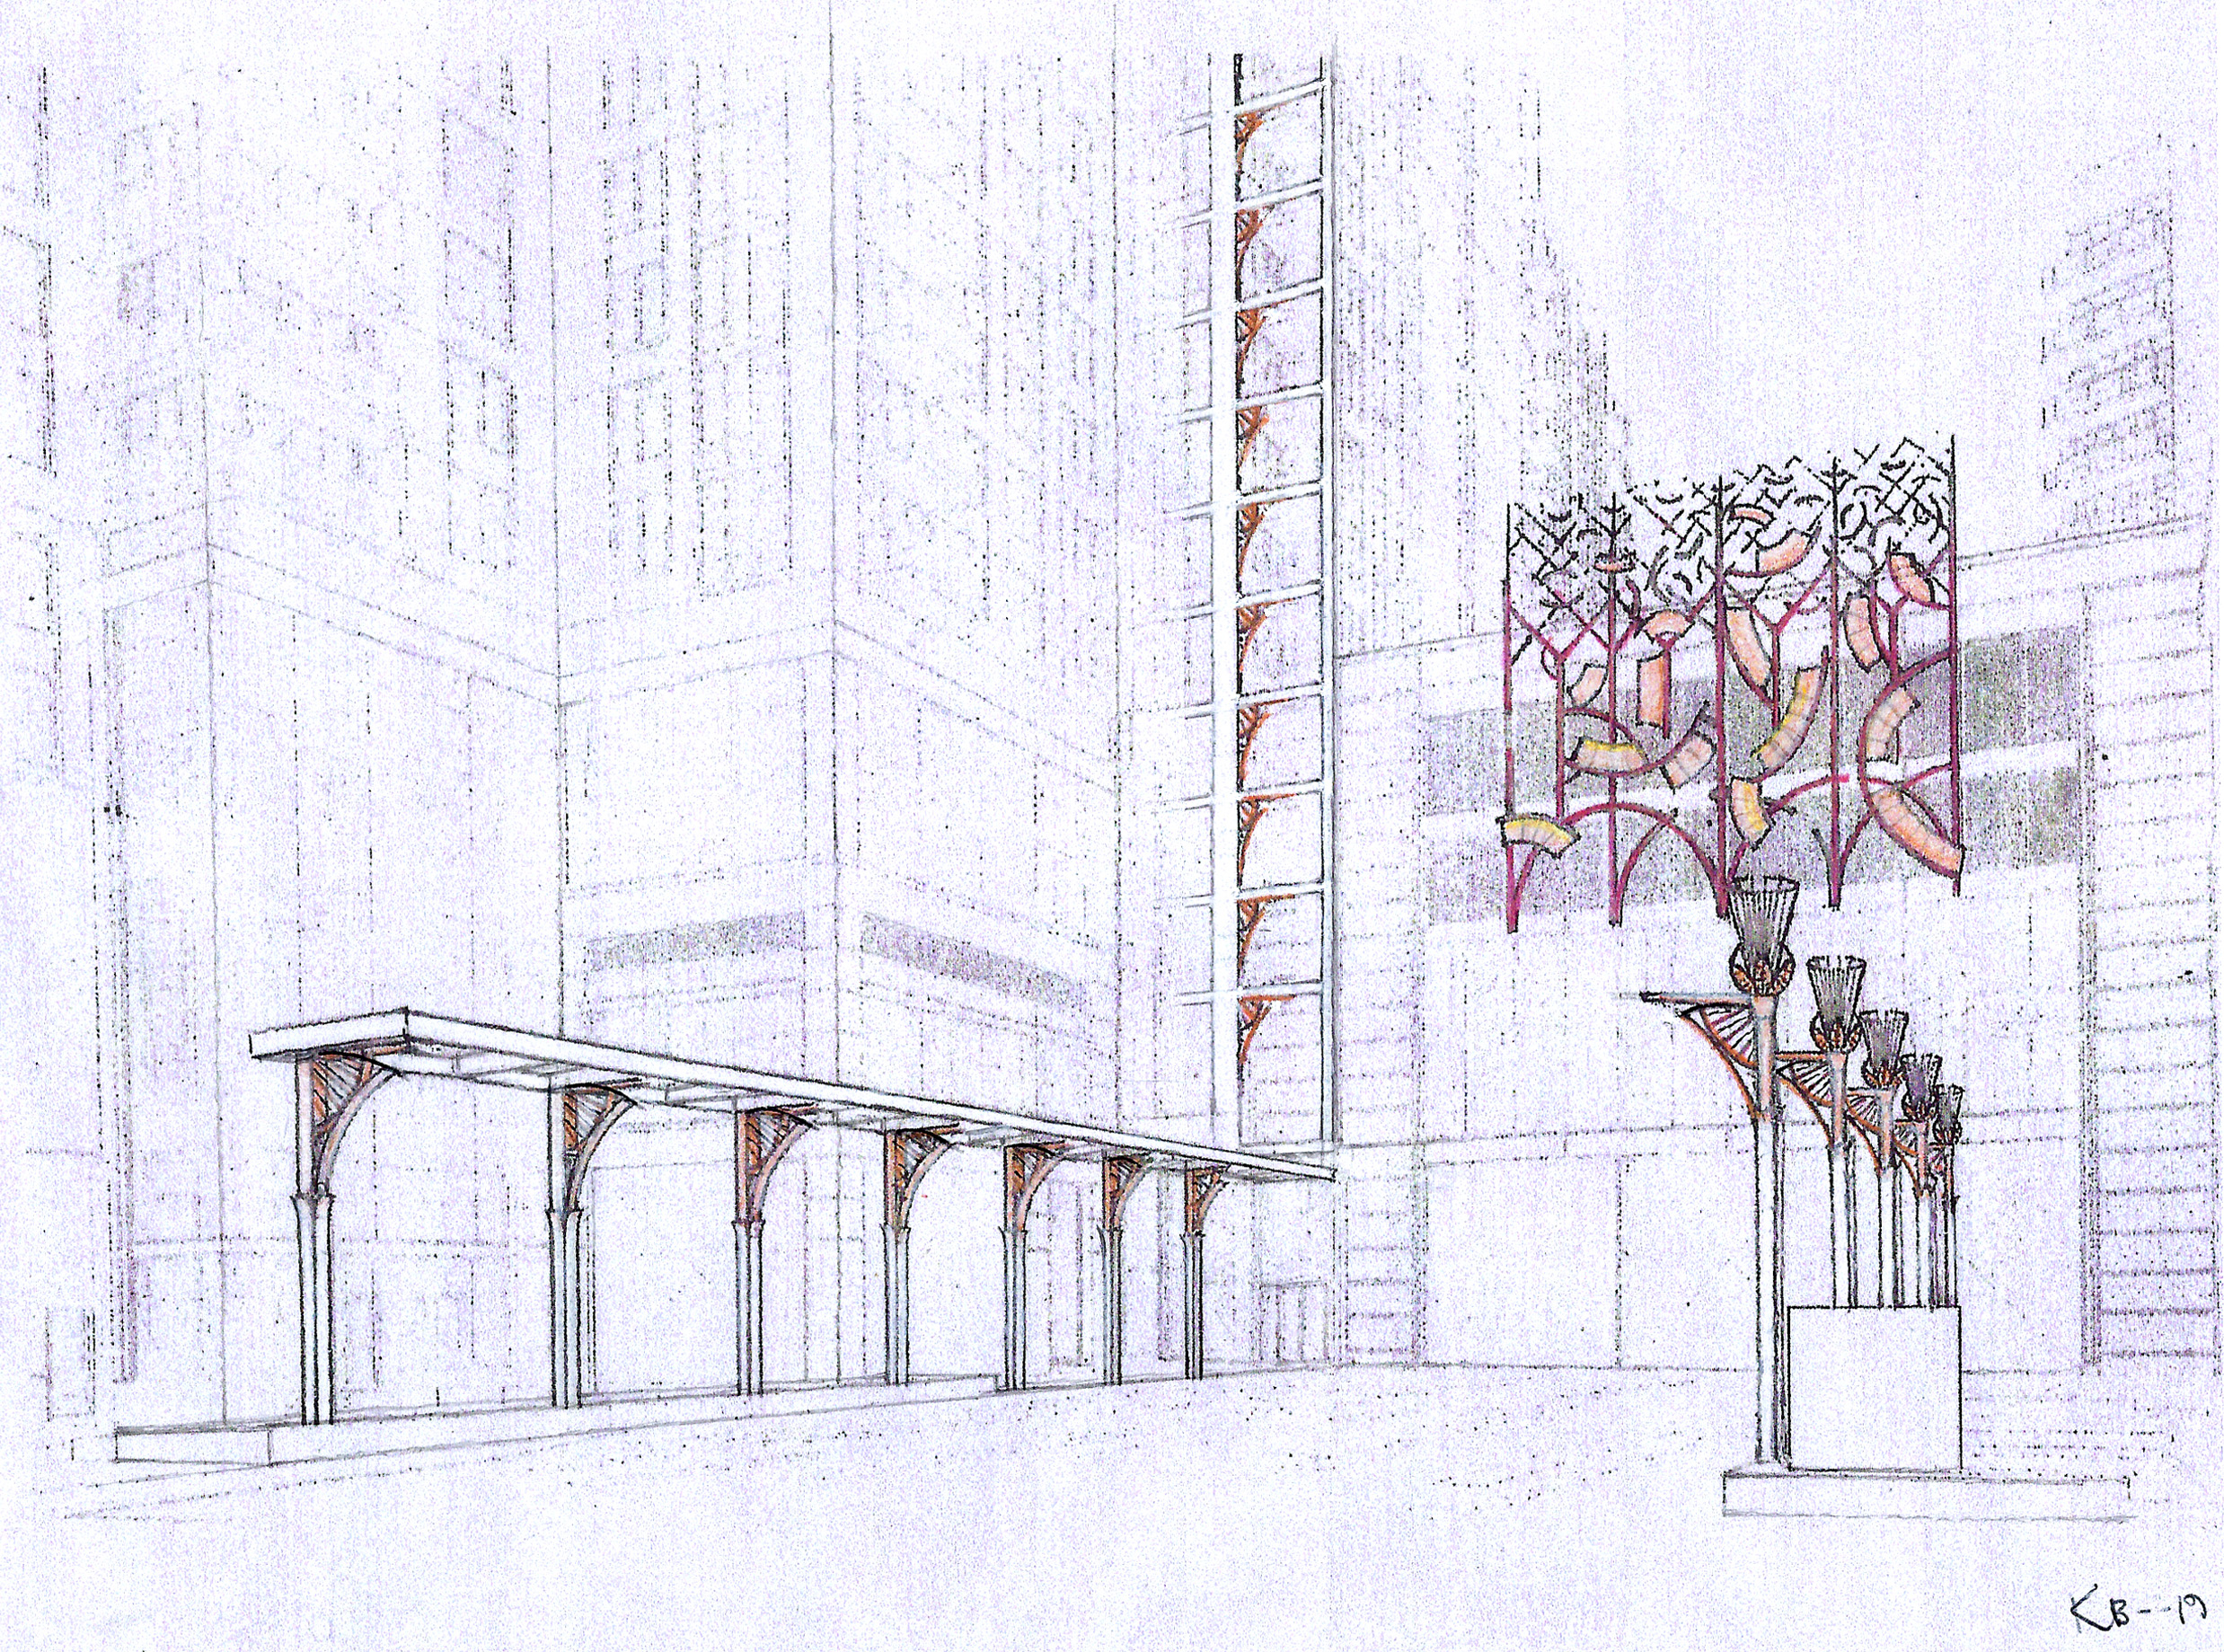 Carlyle Crossing Design Proposal – Plaza Entrance Trellis, Light Fixtures, and Frieze